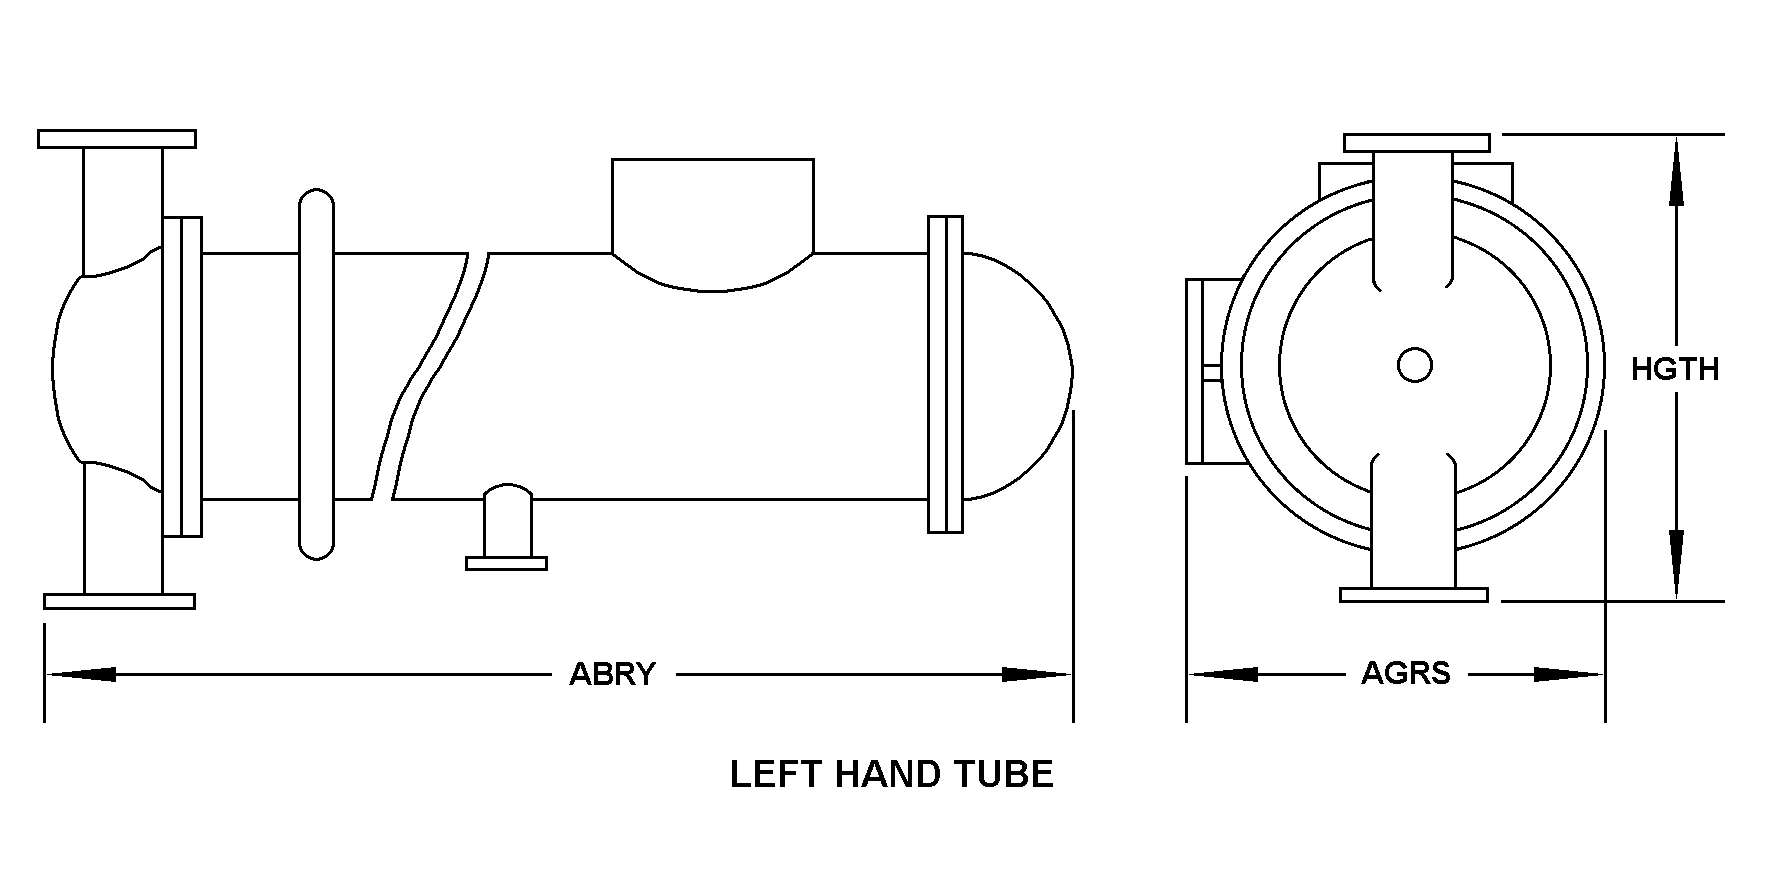 LEFT HAND TUBE style nsn 4420-01-422-9841